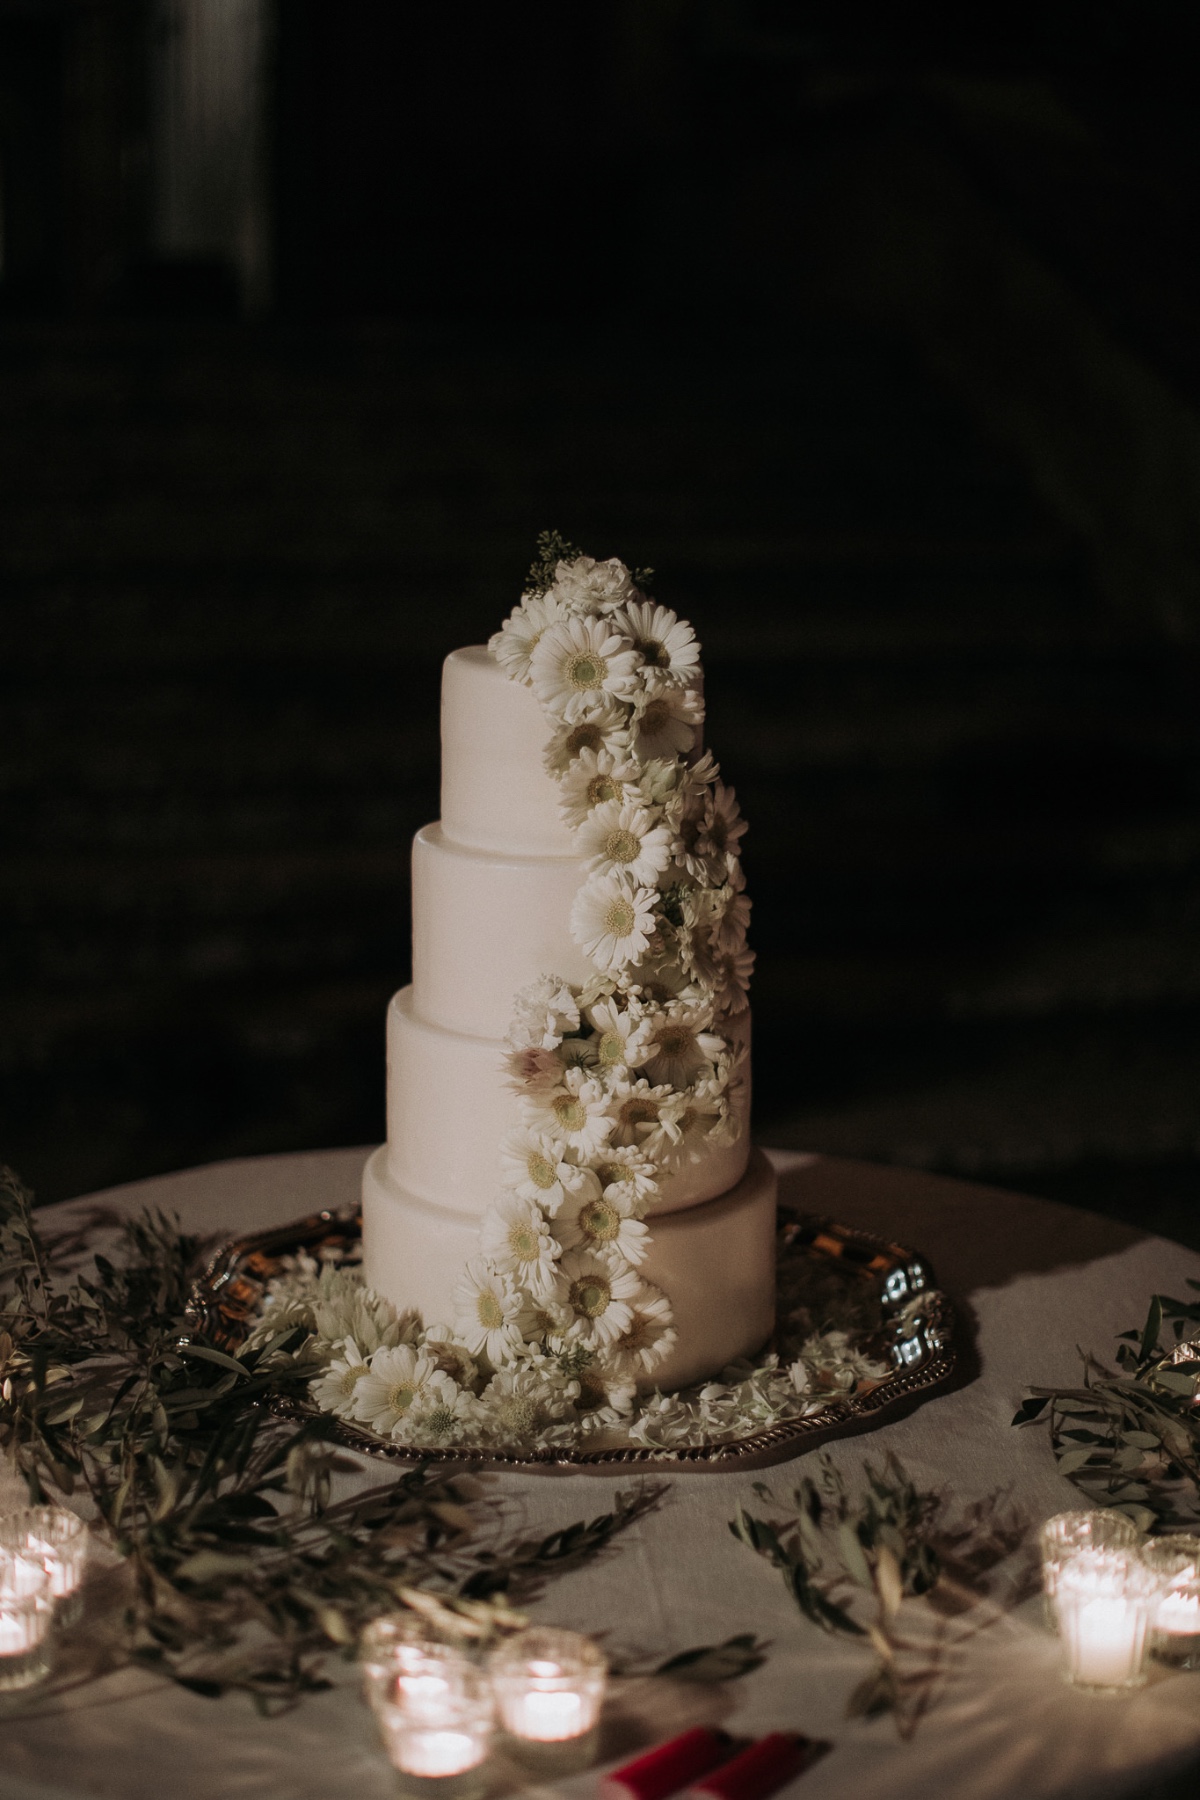 Elegant smooth buttercream wedding cake adorned with white daises